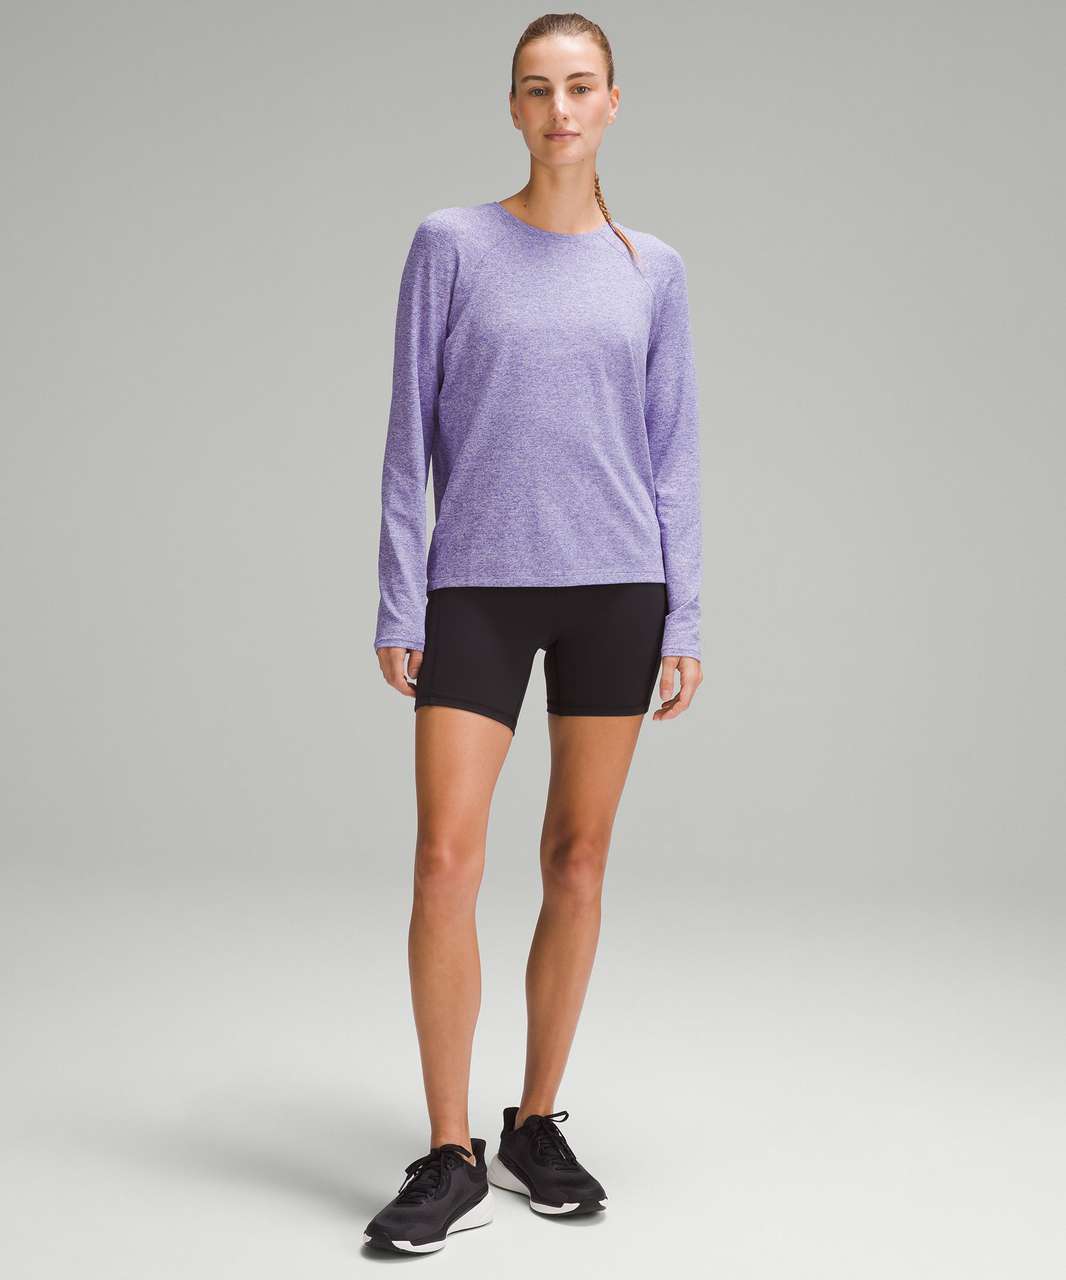 Lululemon License to Train Classic-Fit Long-Sleeve Shirt - Heathered Petrol Purple